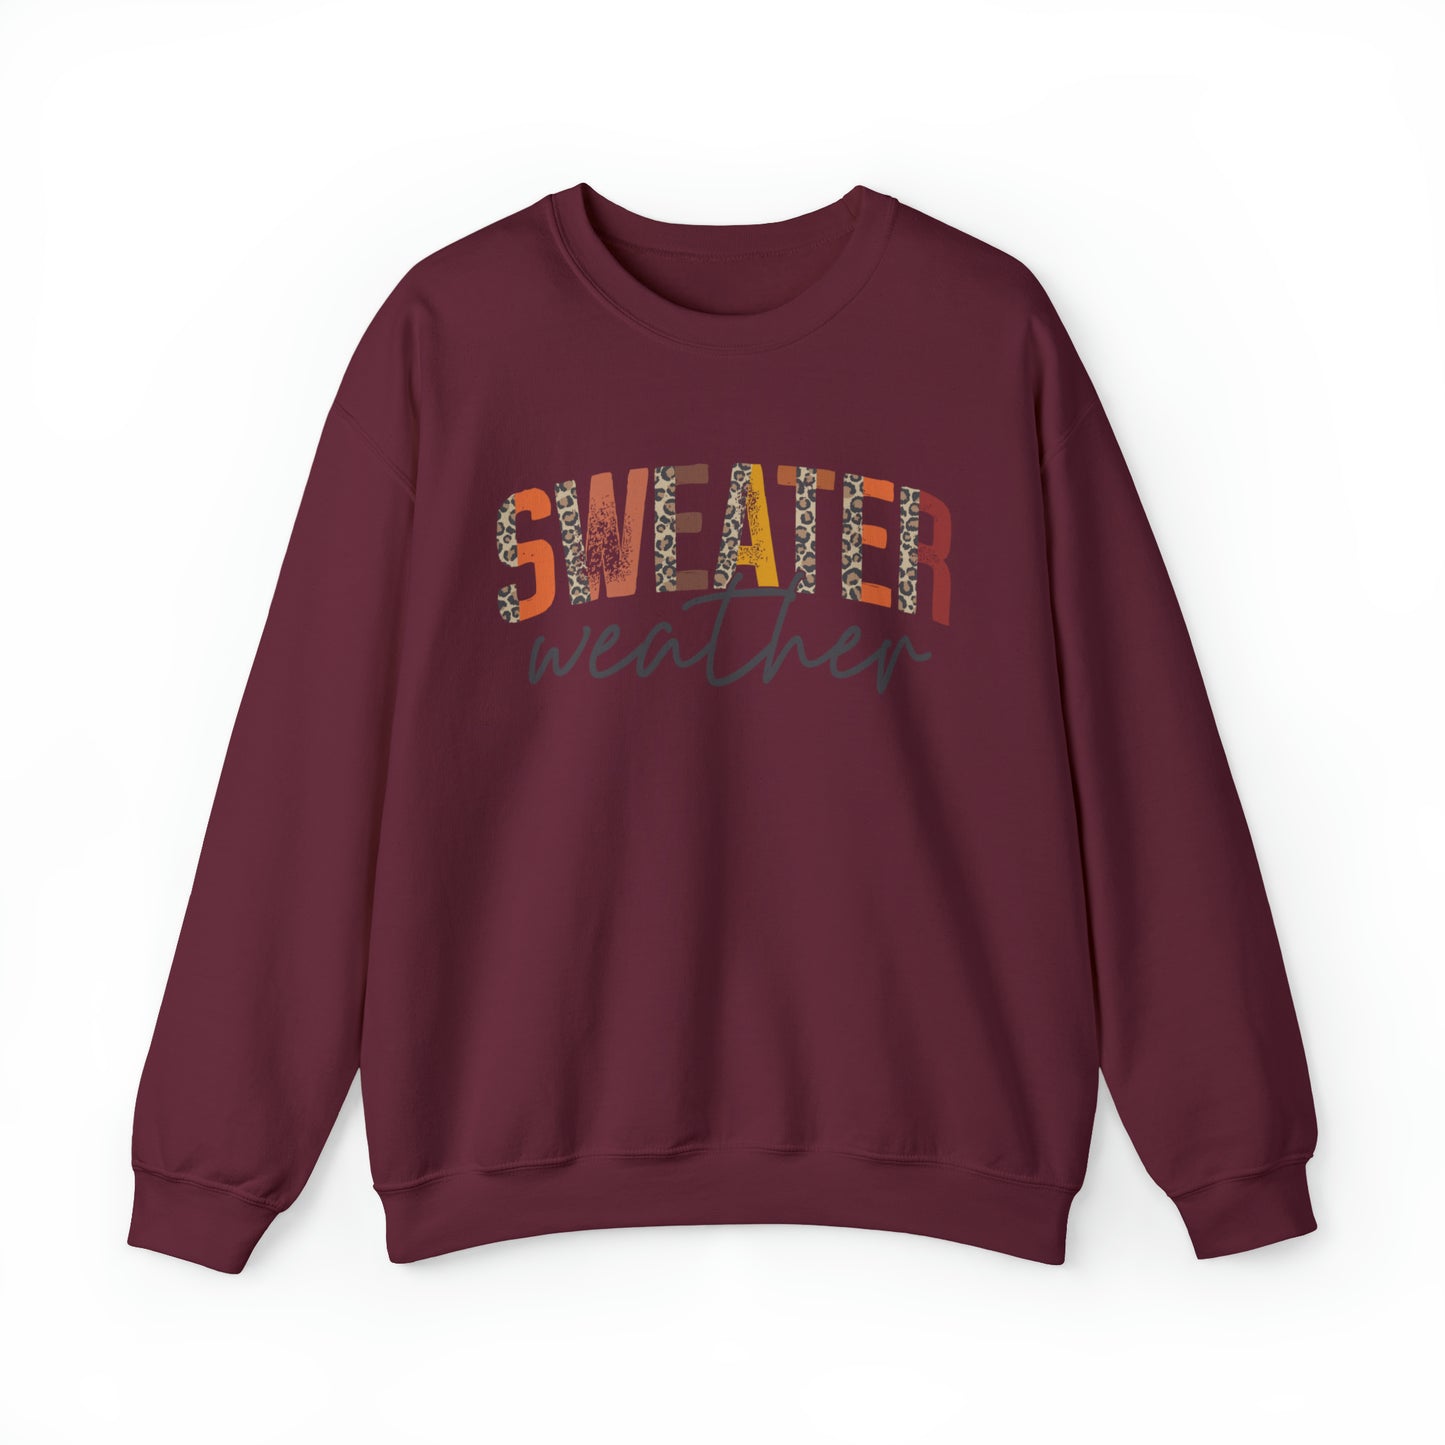 Sweater Weather Fall Crewneck Sweatshirt